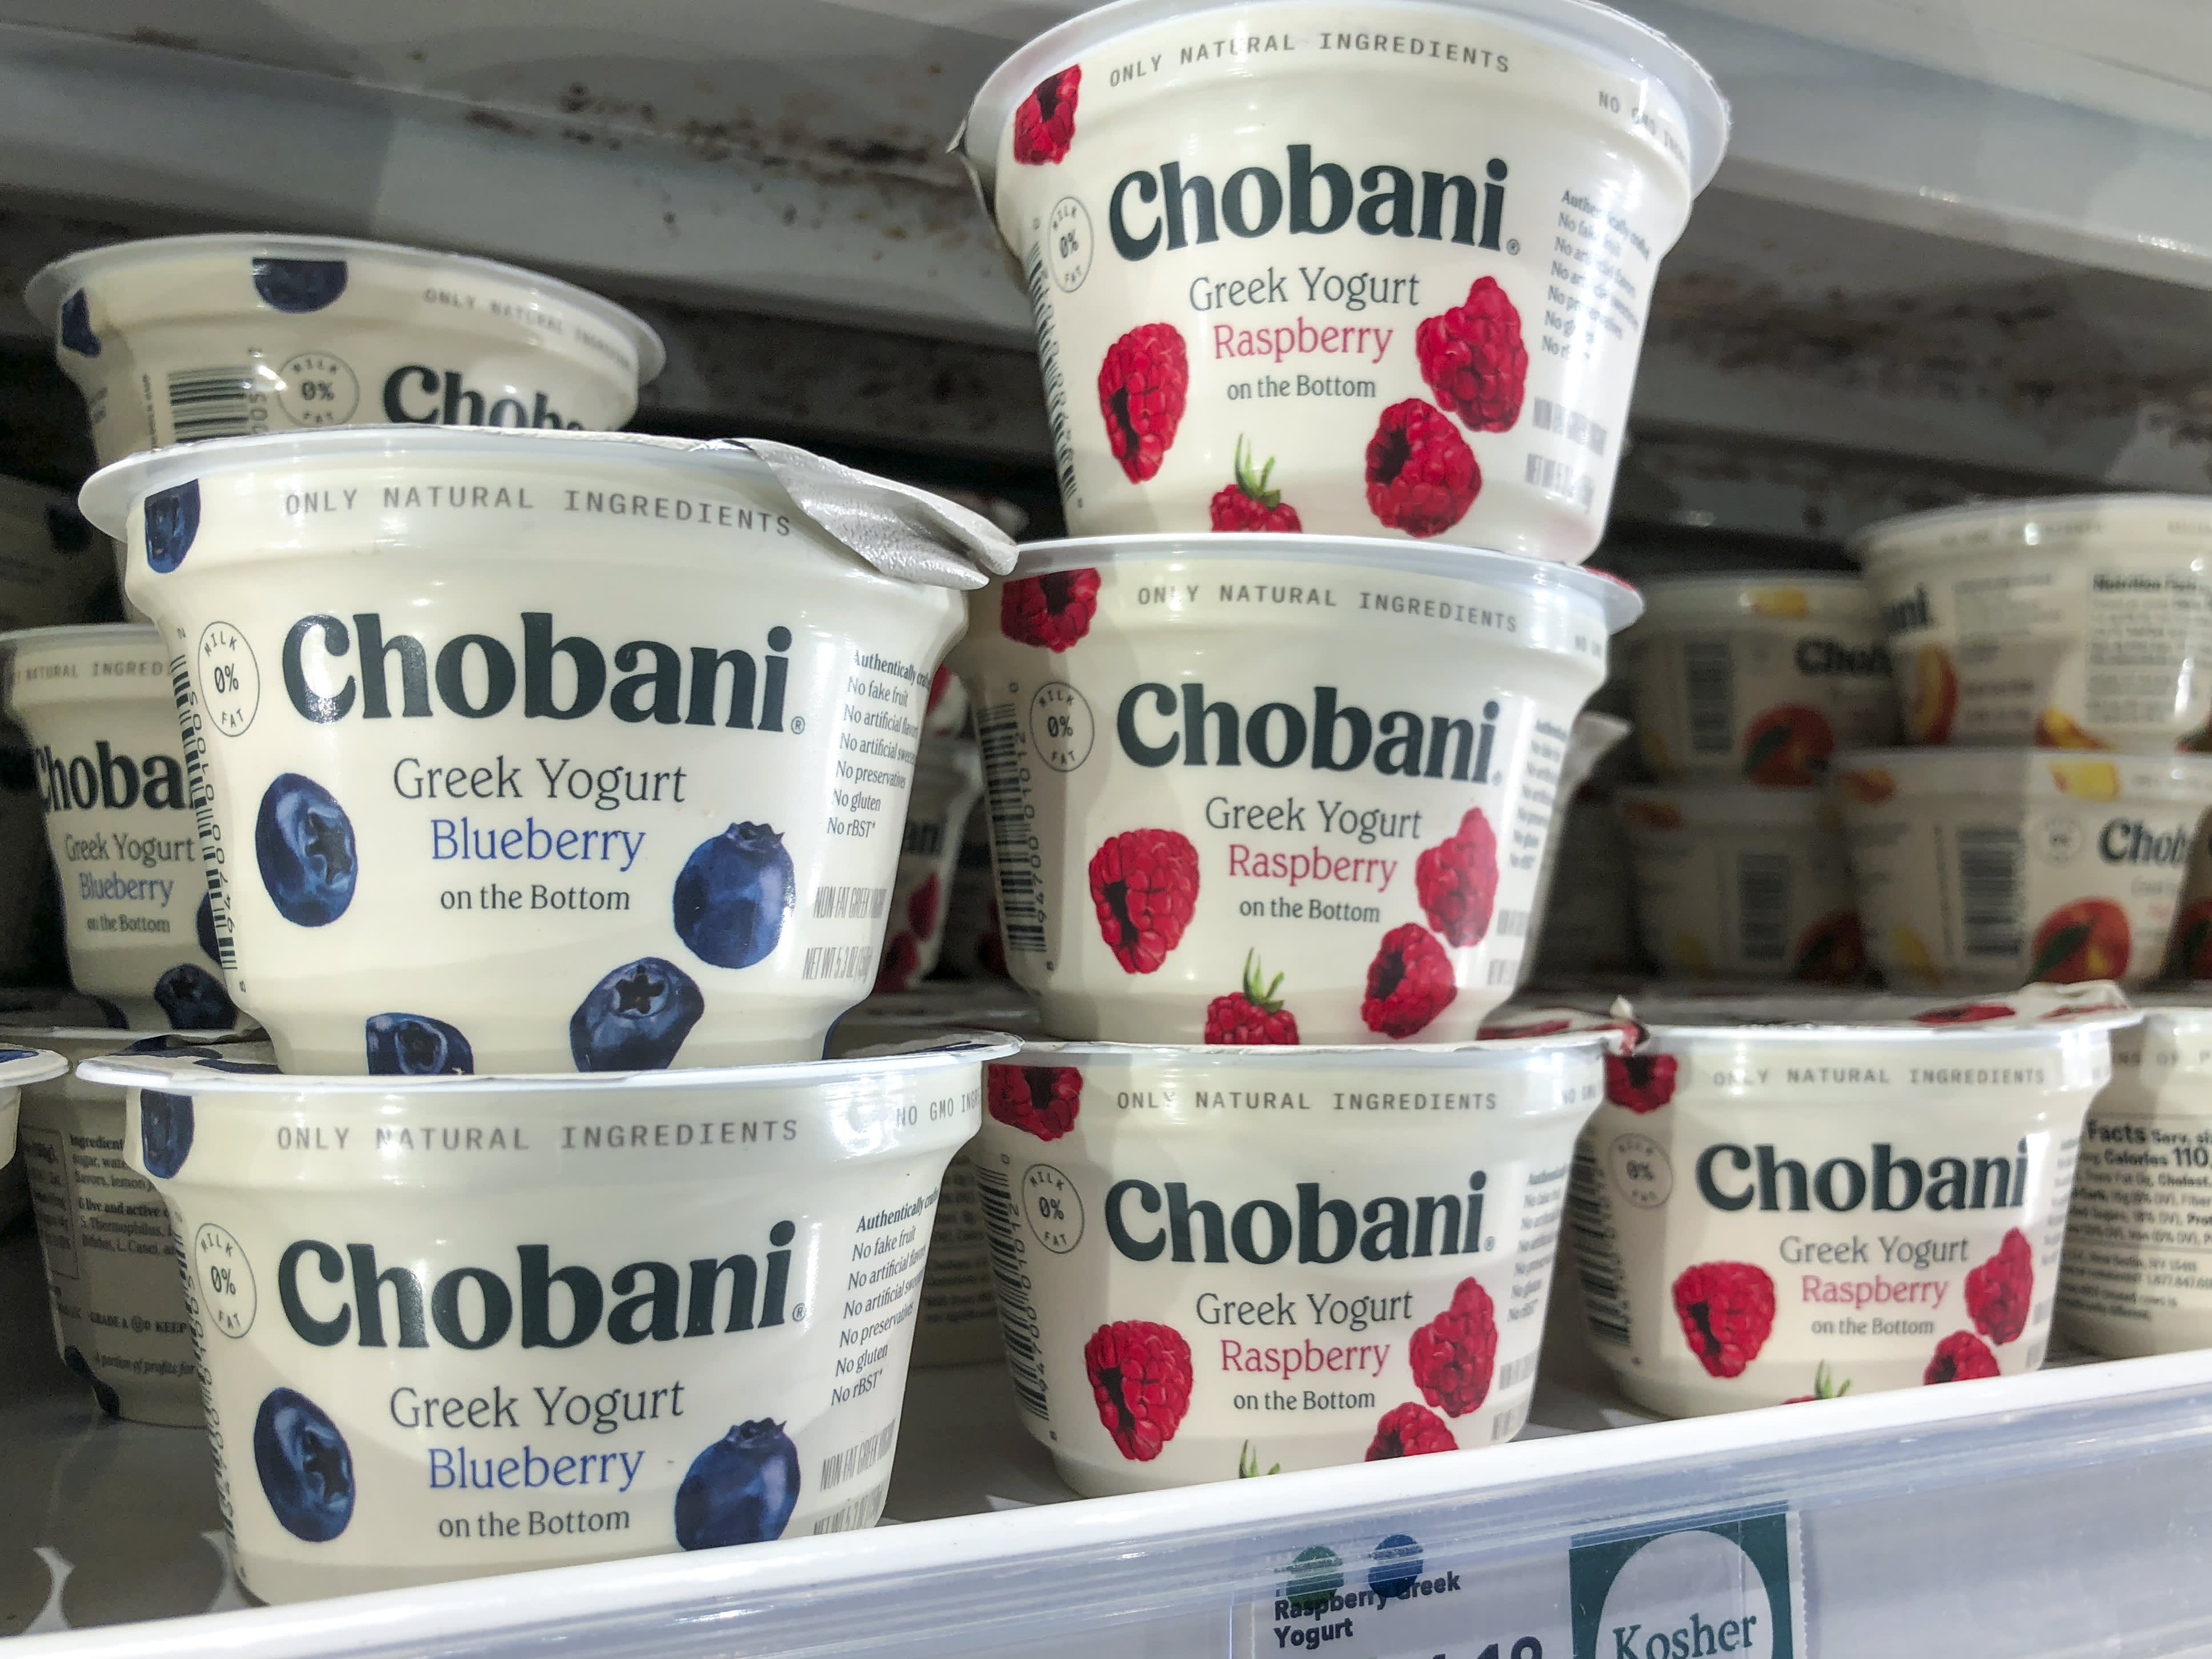 Chobani files to go public through initial public offering as its yogurt sales rise